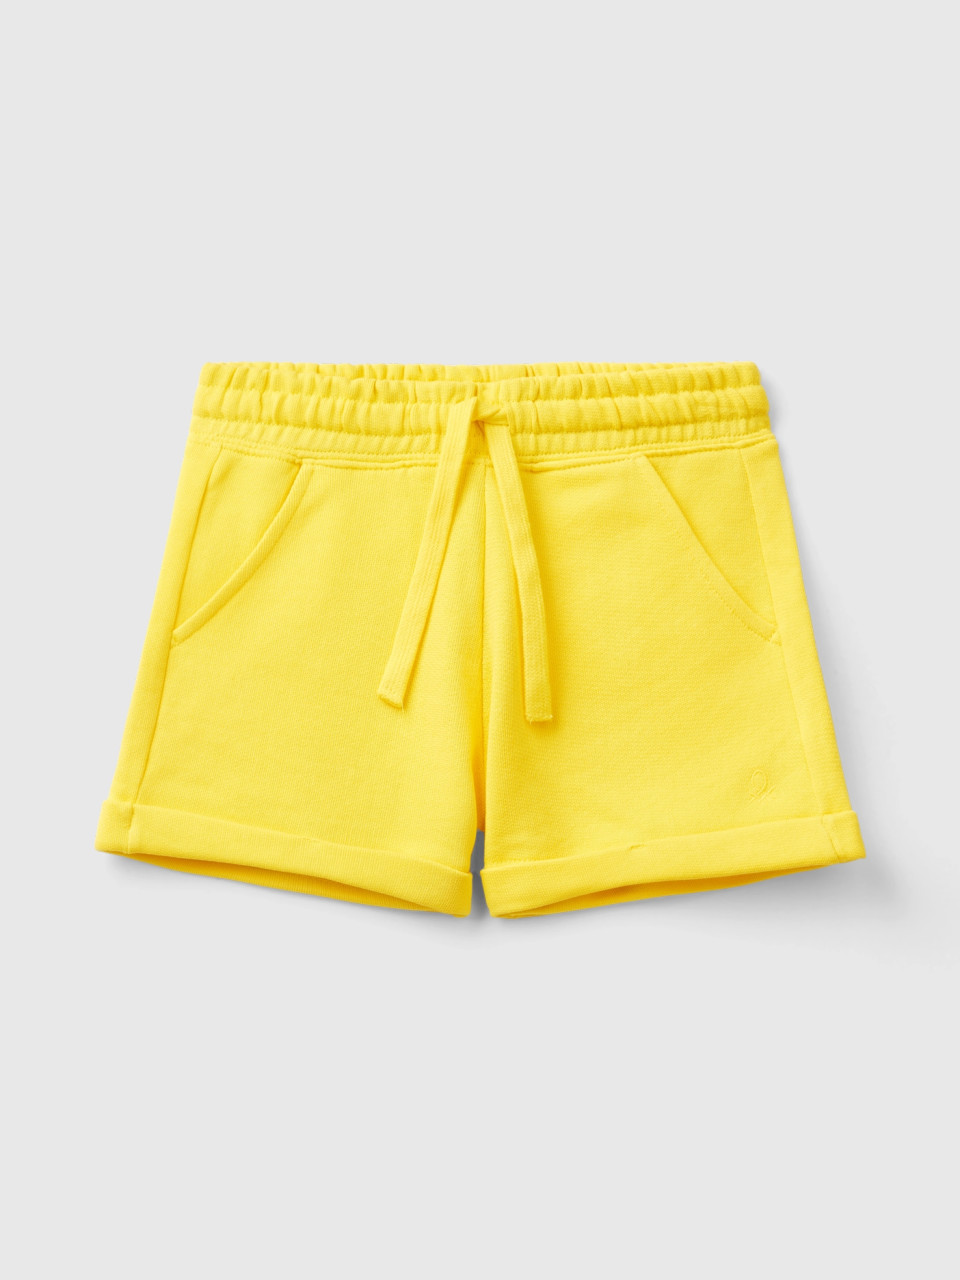 Benetton, 100% Cotton Sweat Shorts, Yellow, Kids